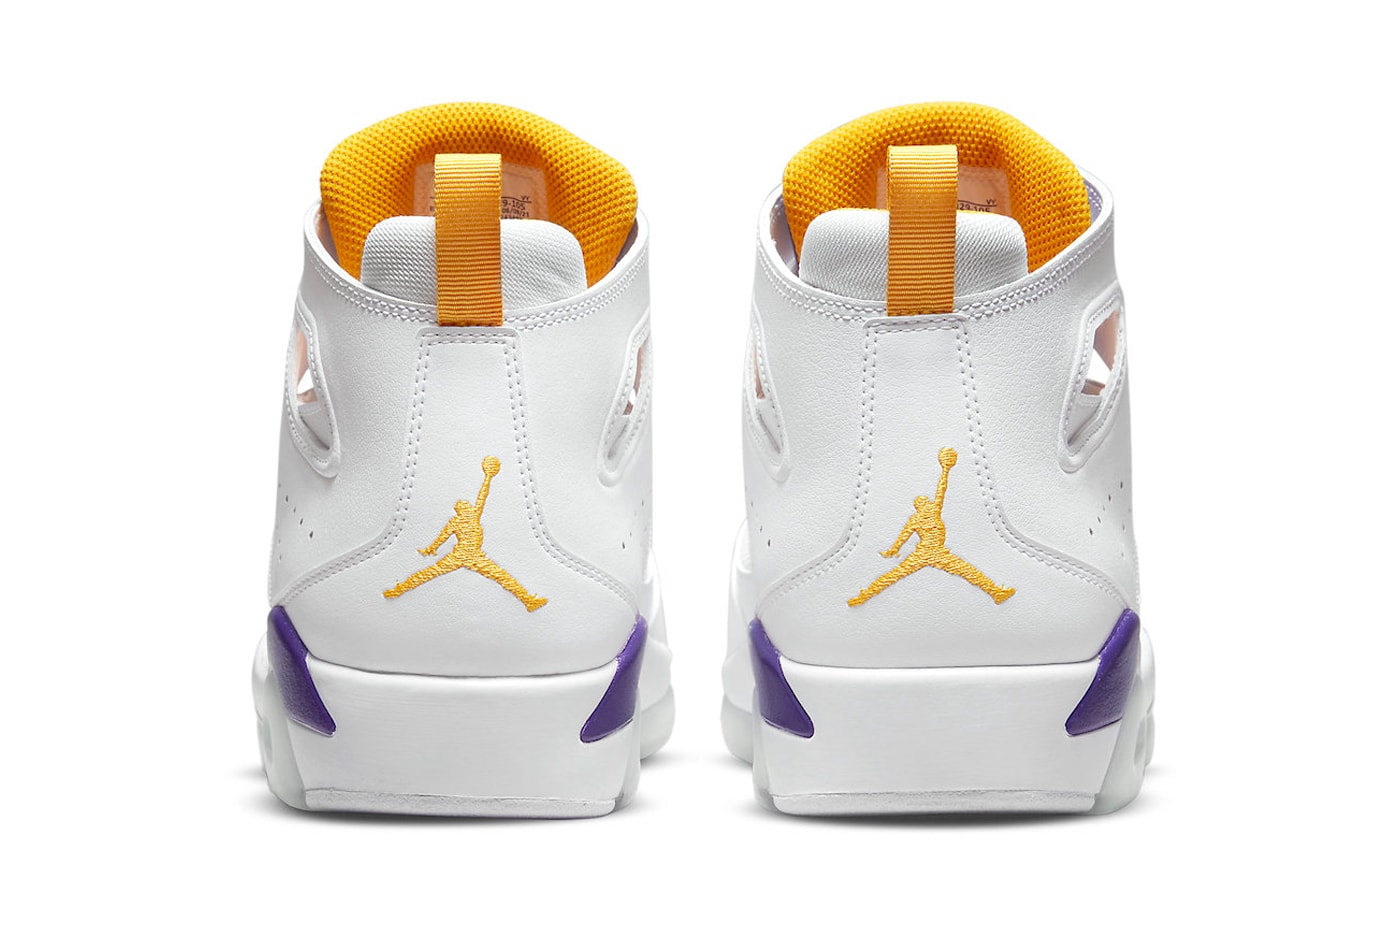 Jordan Flight Club 91 in "Lakers" DC7329-105 Release Date footwear sneakers Air Jordan Michael Jordan leather white court purple university gold